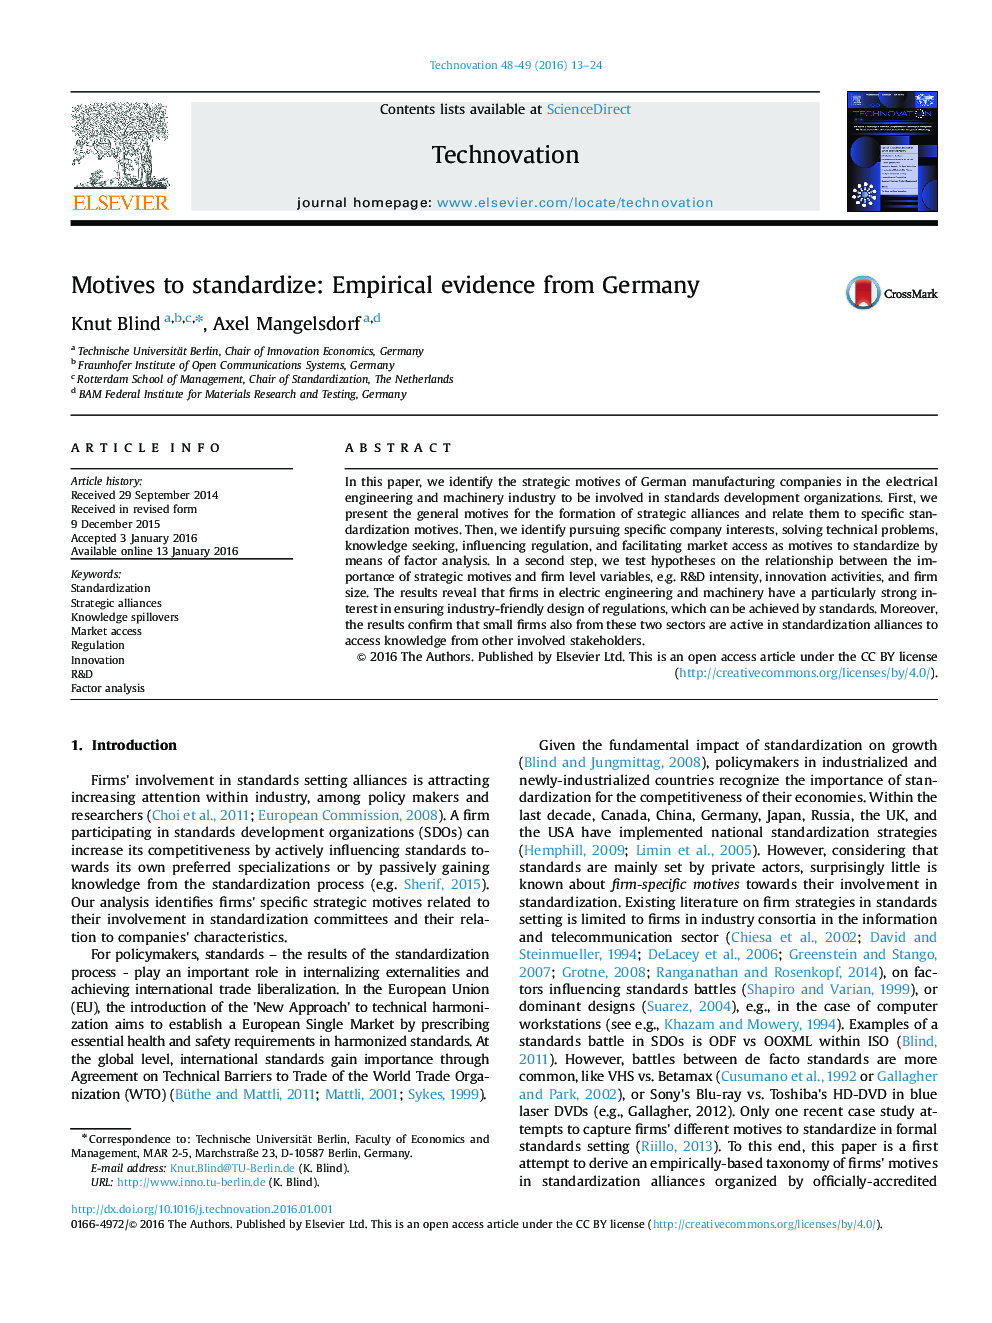 Motives to standardize: Empirical evidence from Germany